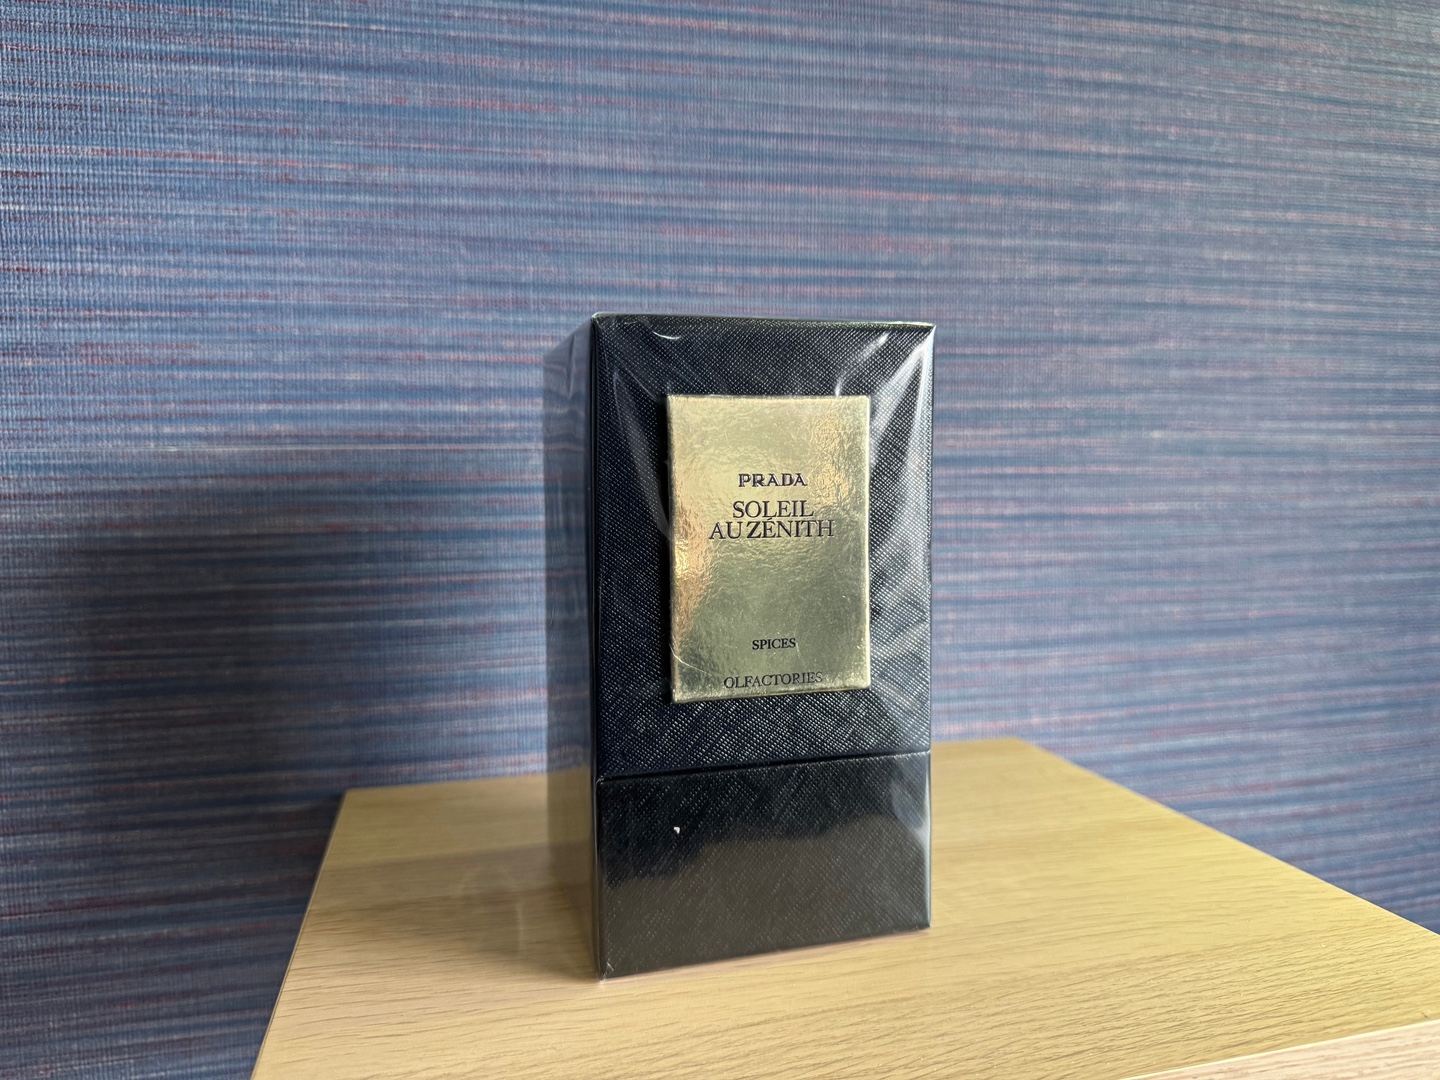 joyas, relojes y accesorios - Perfume Prada Olfactories Soleil Au Zenith 100ML,Nuevo, Original RD$ 13,500 NEG 0